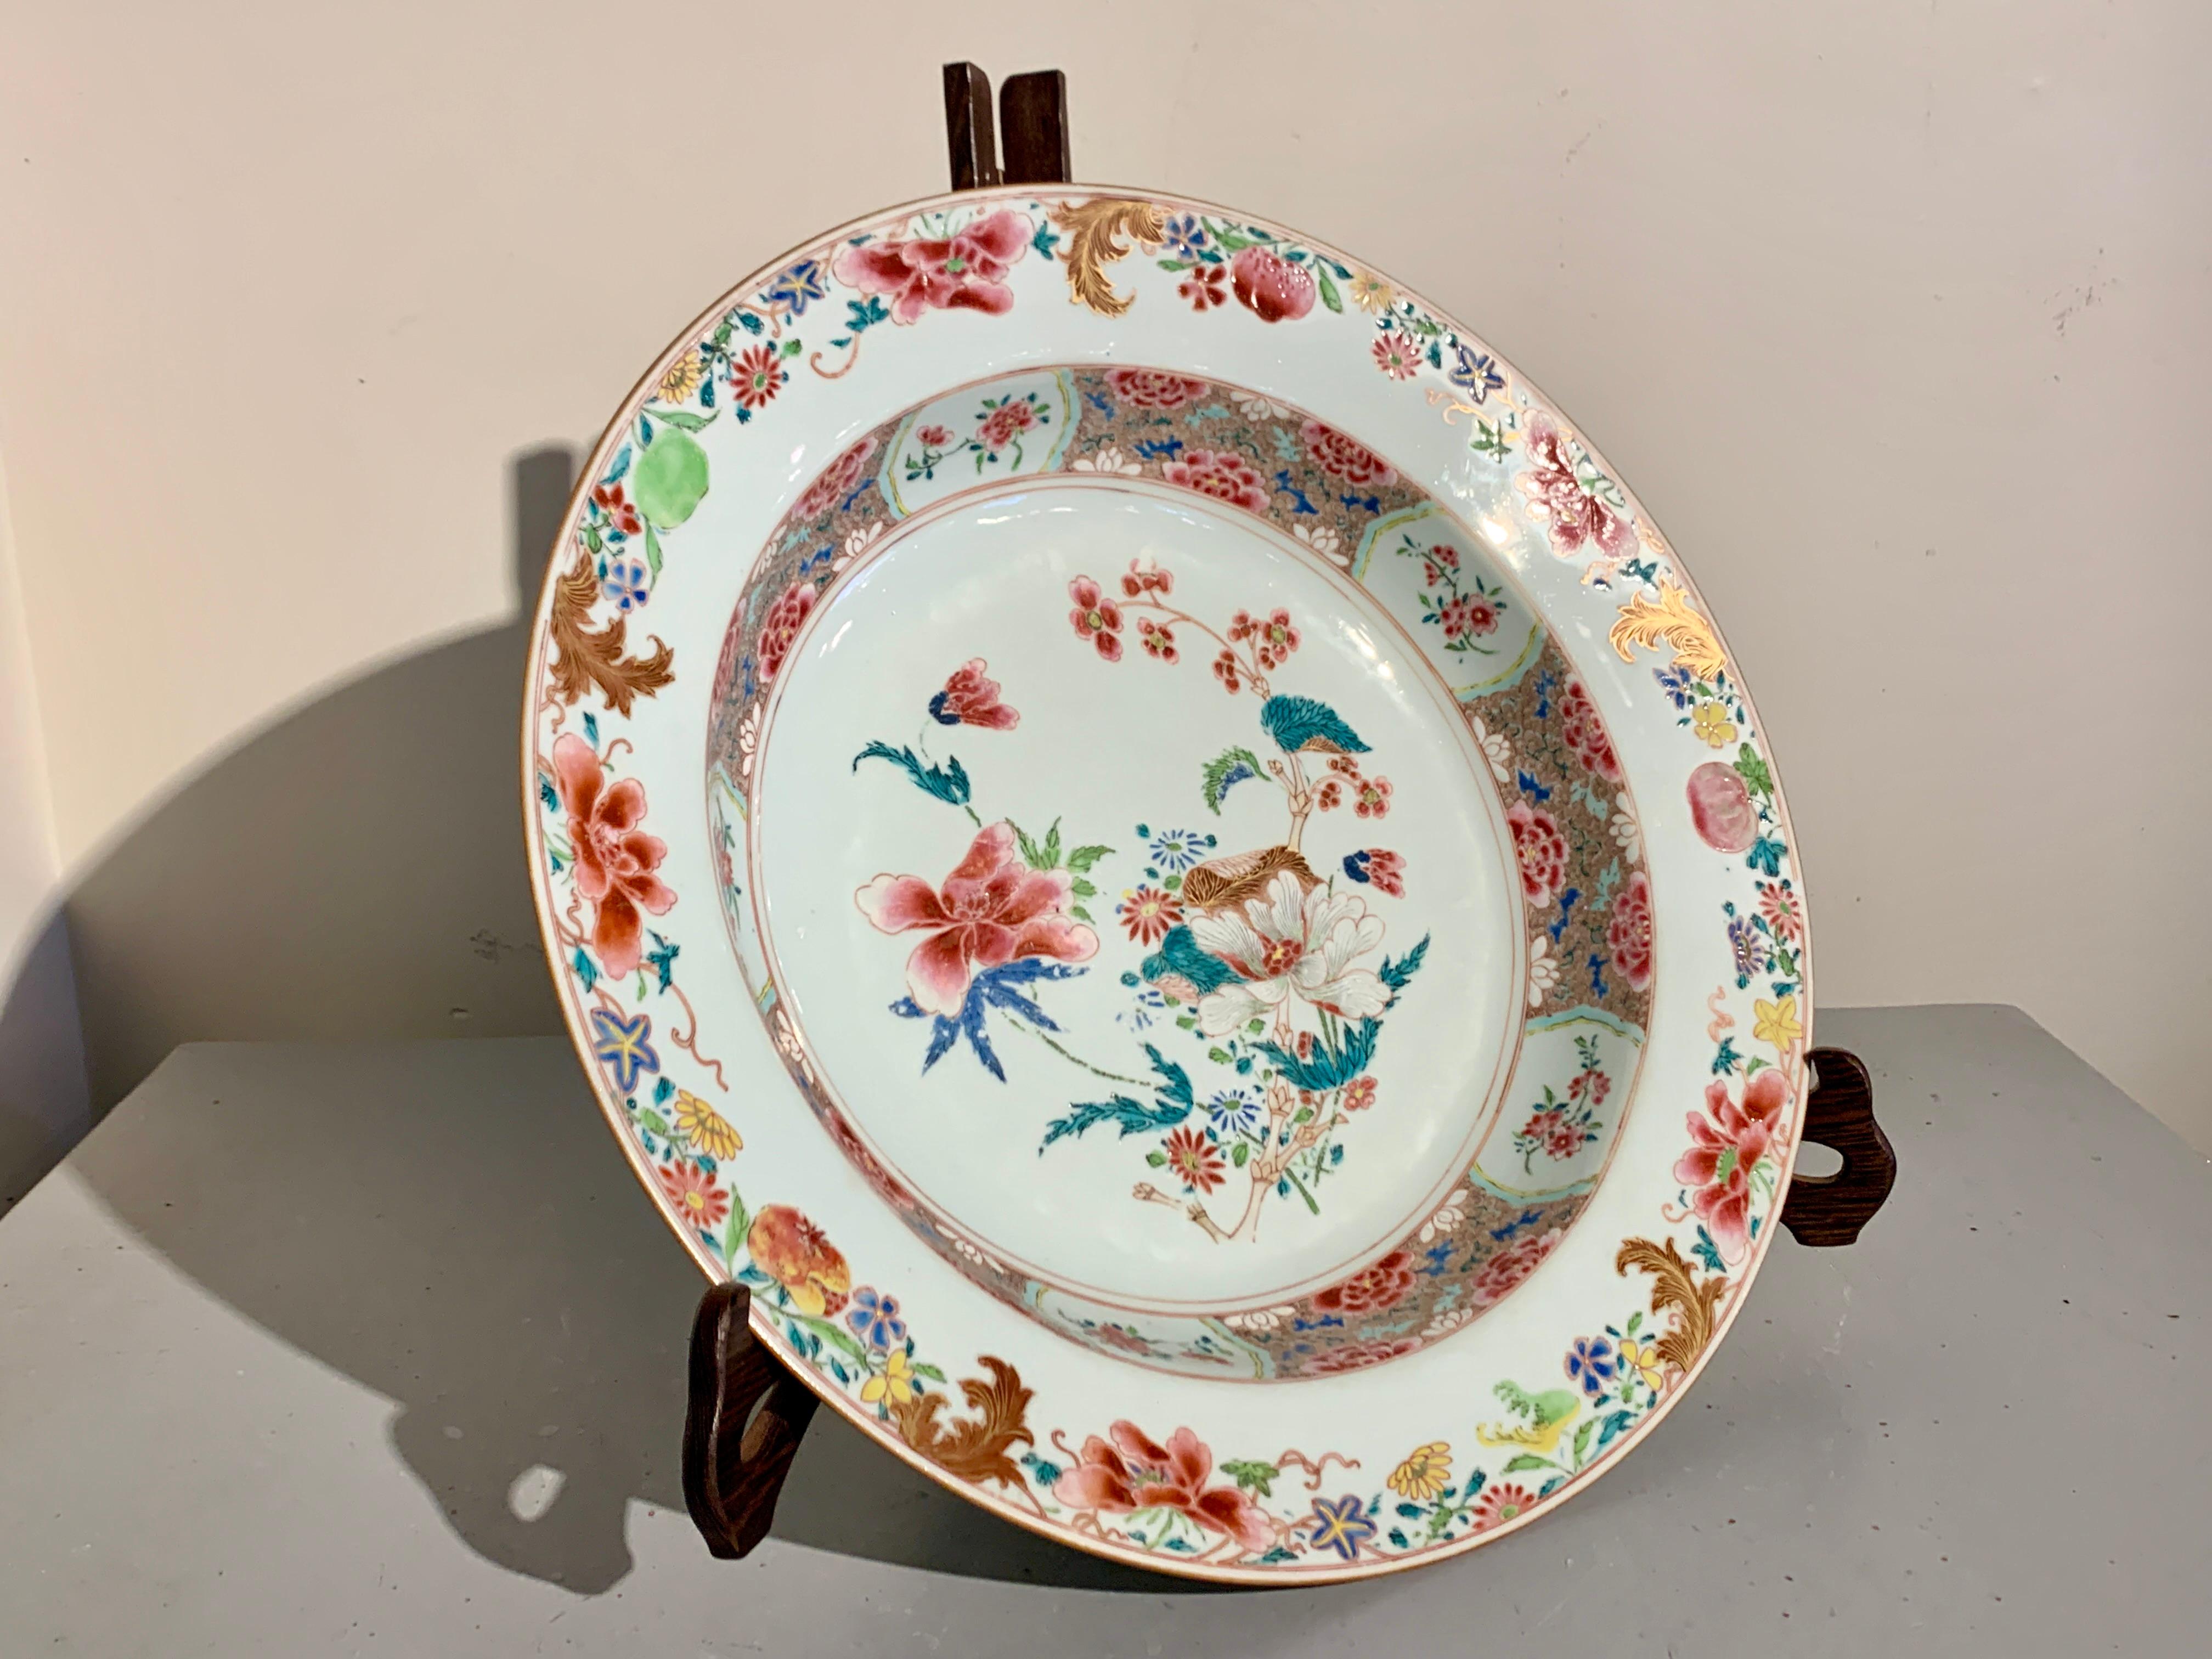 Enameled Chinese Export Porcelain Famille Rose Large Deep Dish, 18th Century, China